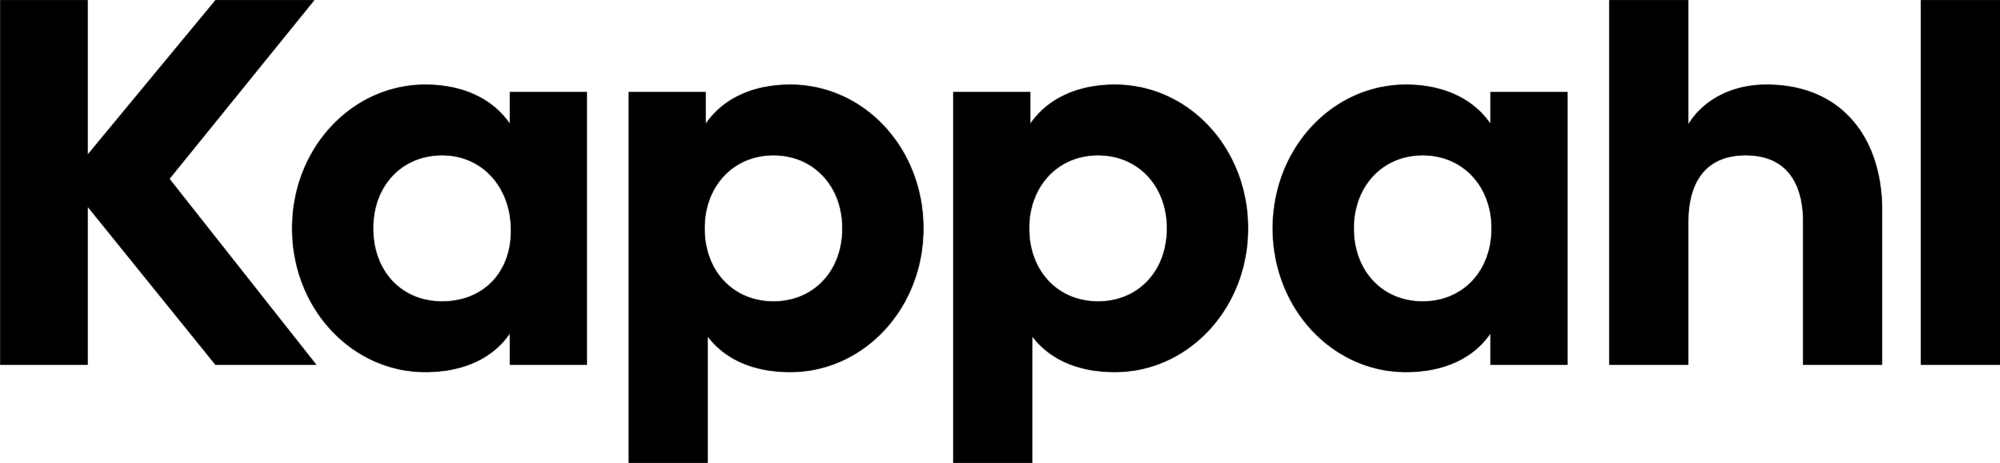 Kappahl-Logotype_RGB_Black